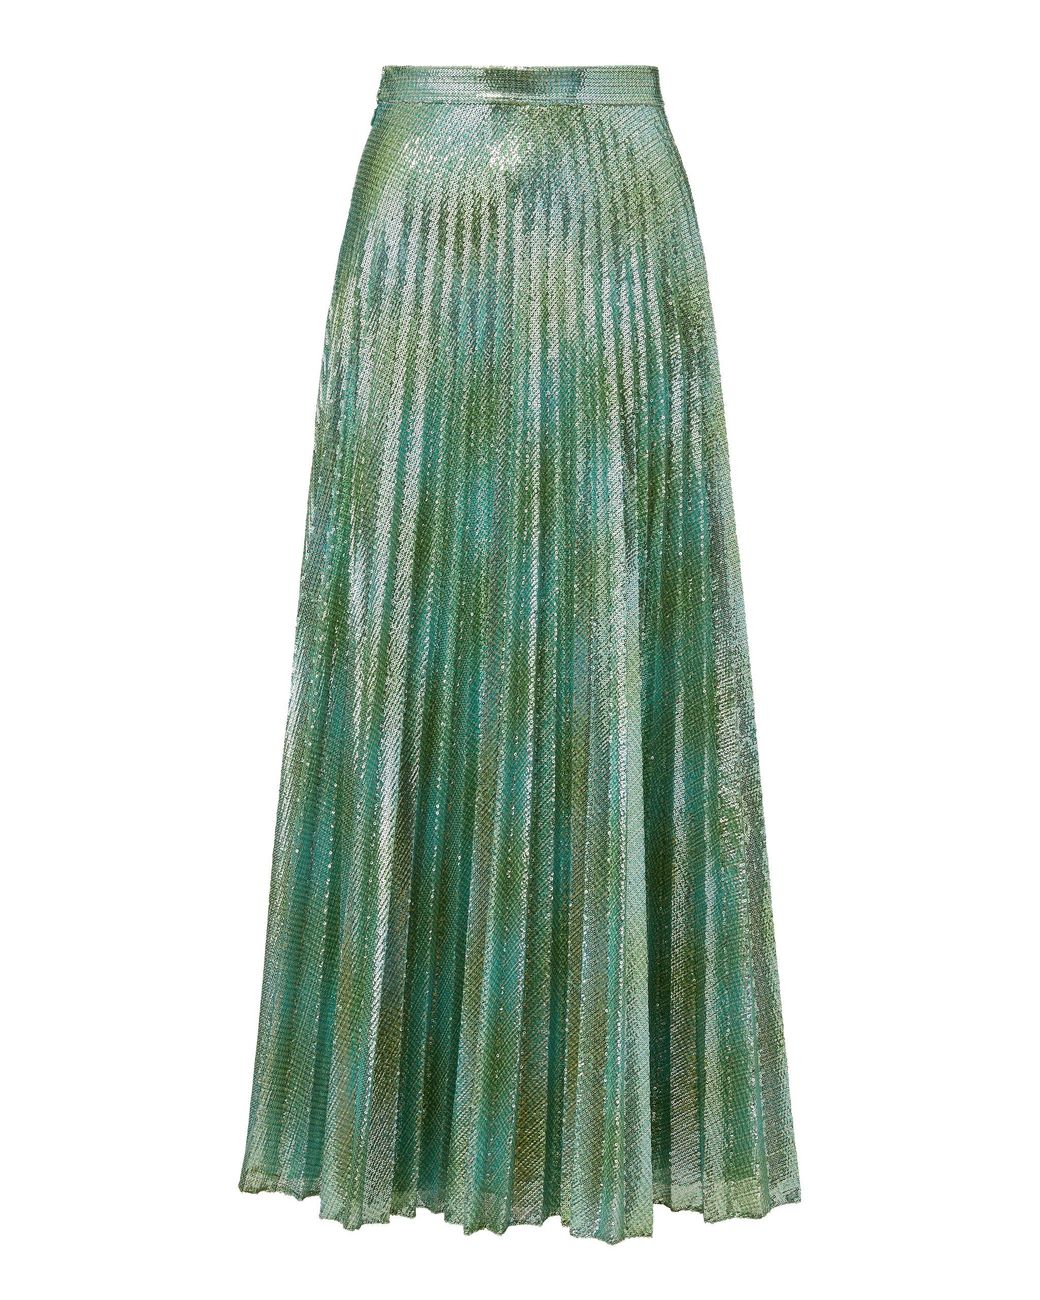 Brandon Maxwell The Sequin Pleated Midi Skirt in Green | Lyst